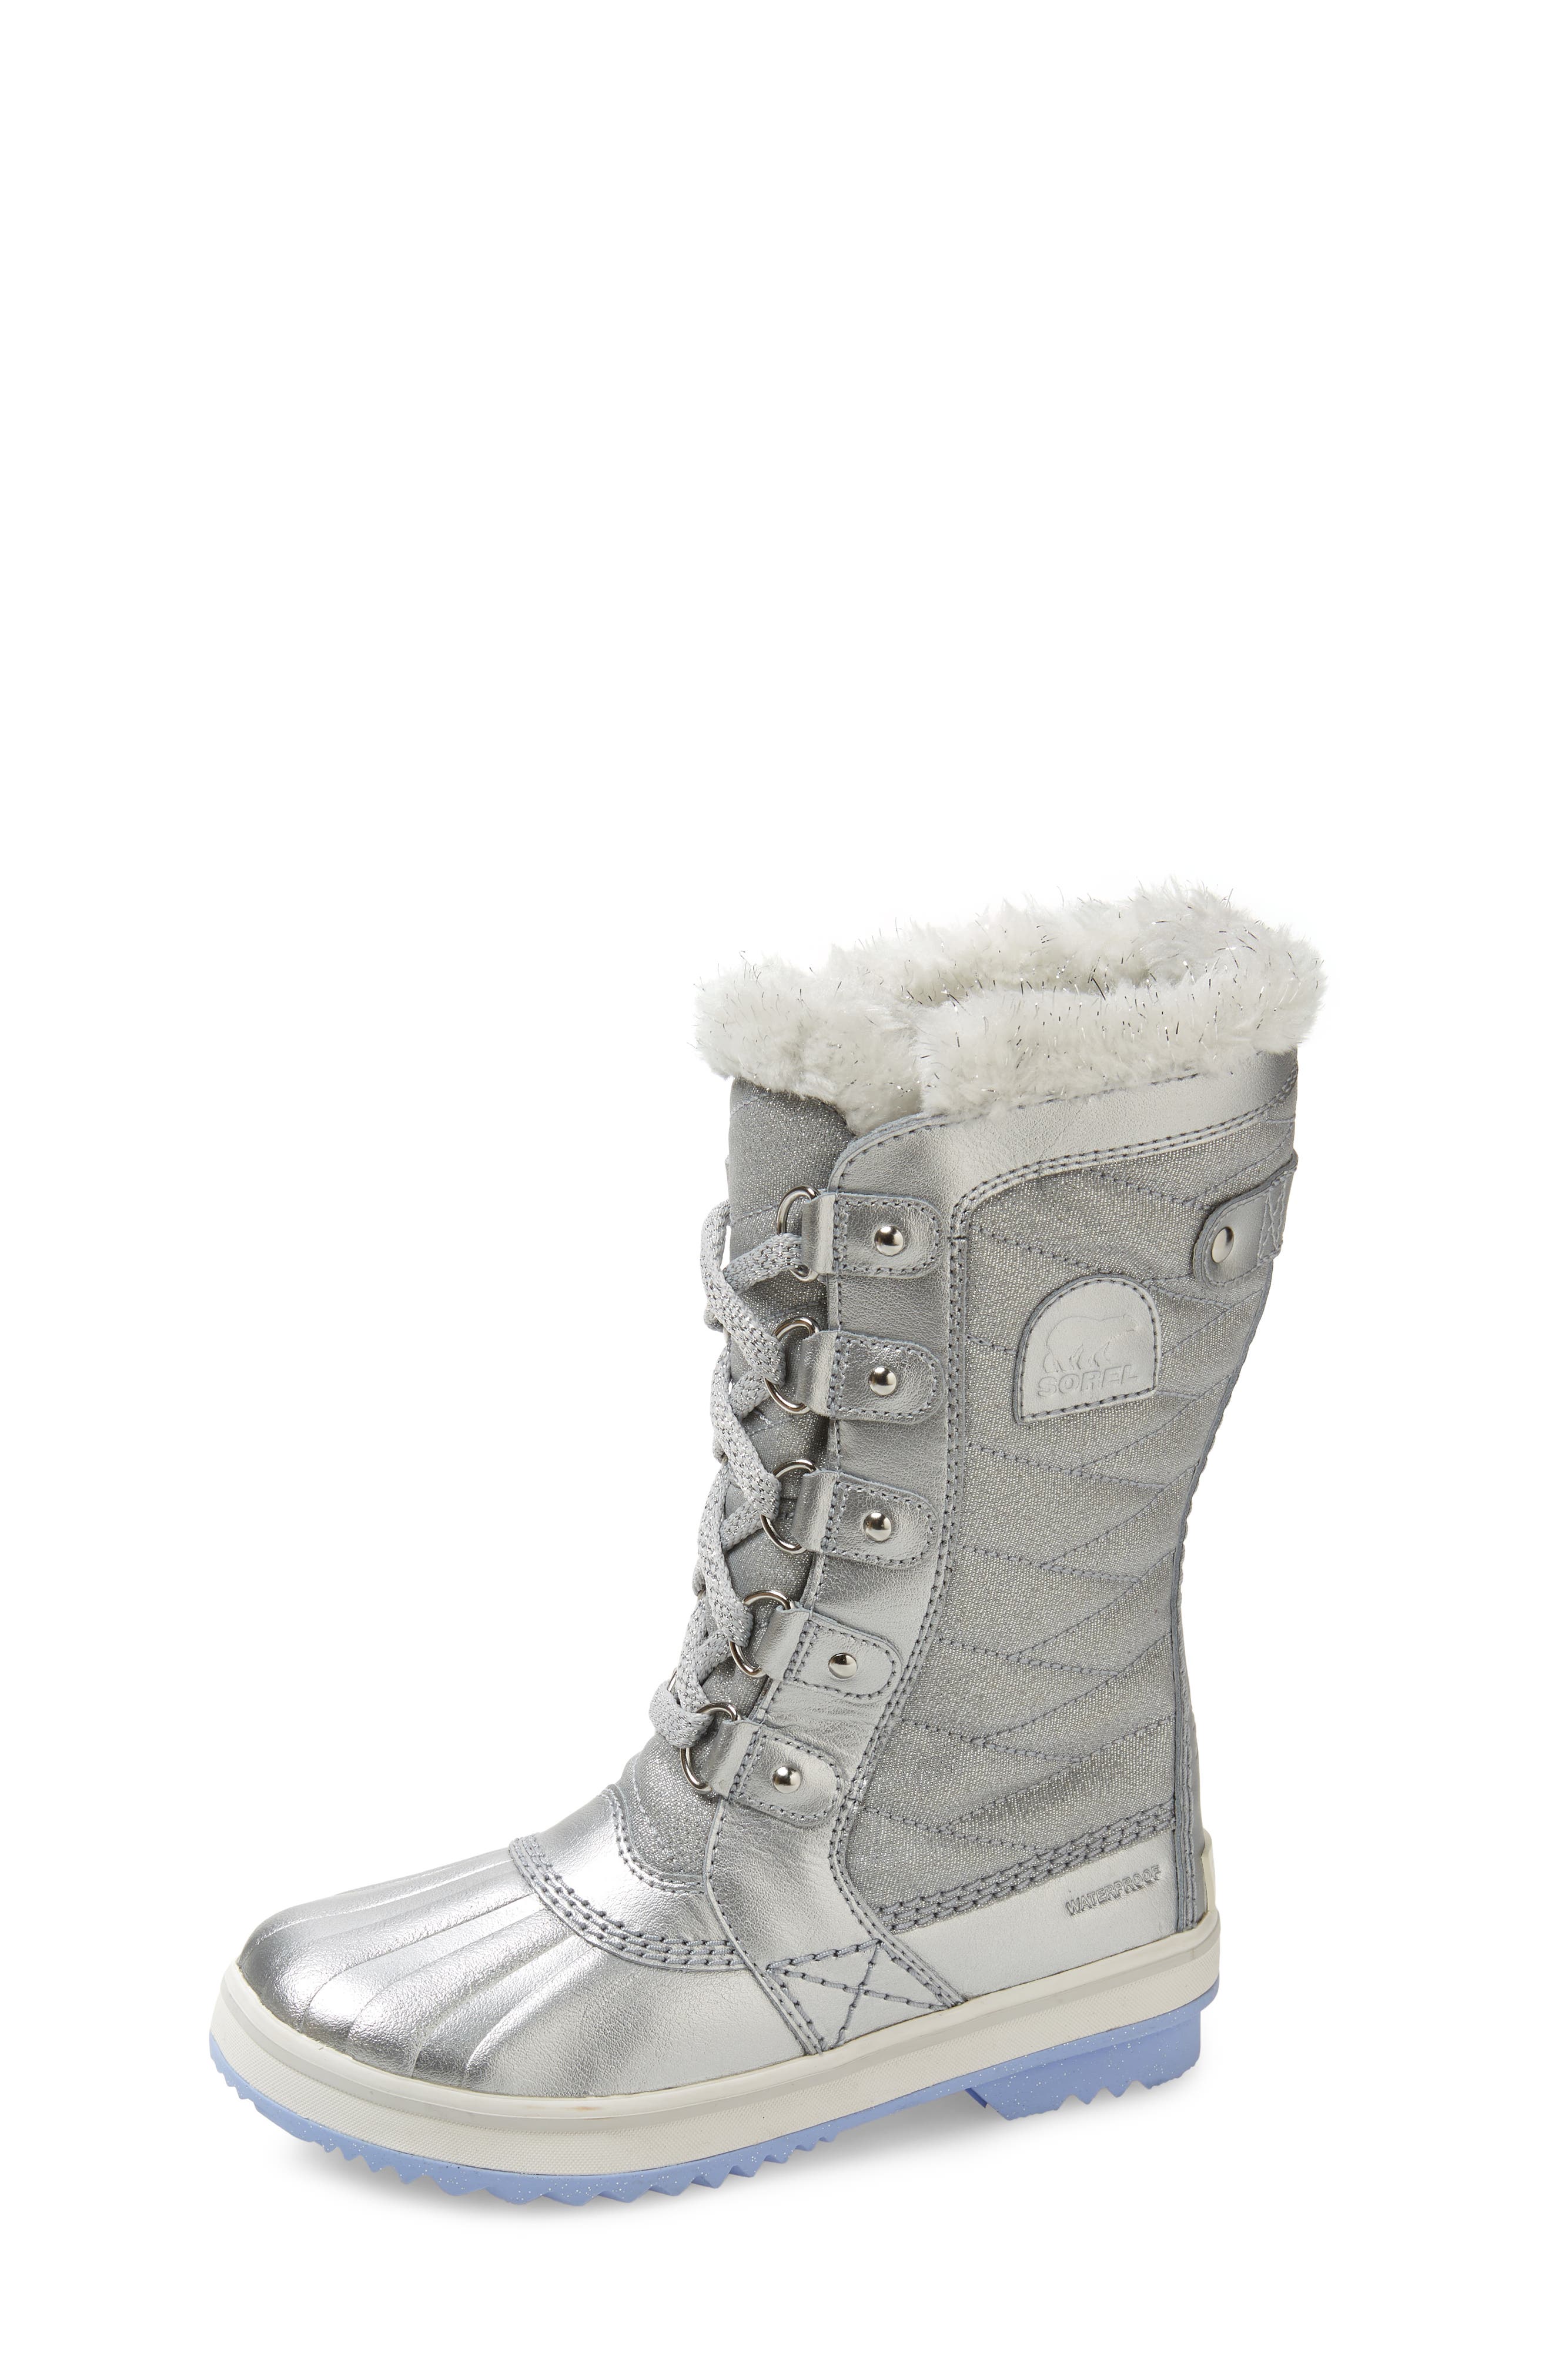 snow boots nordstrom rack